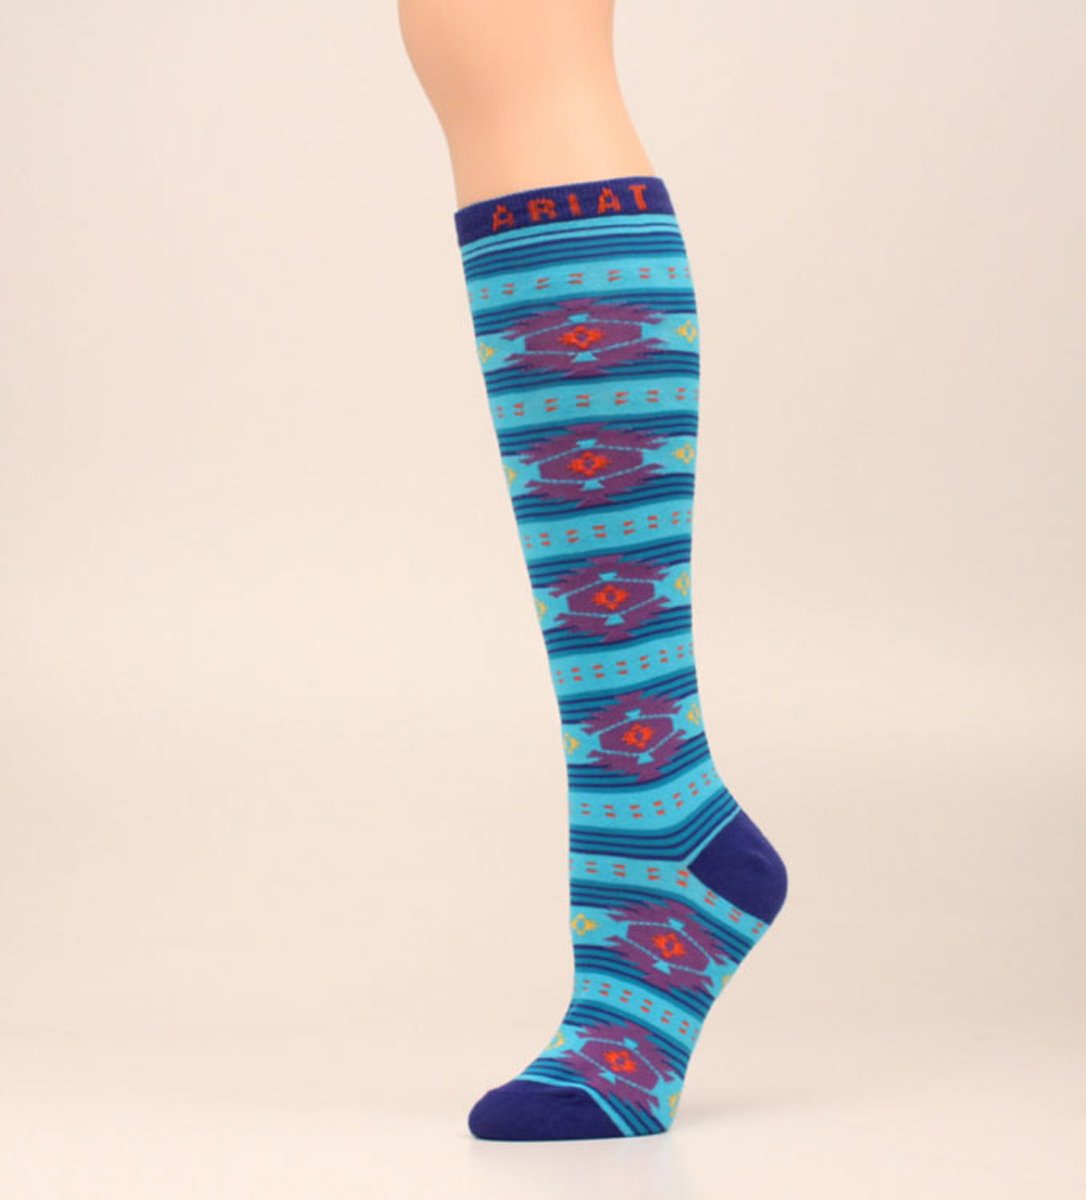 Ariat Socks (multi styles)